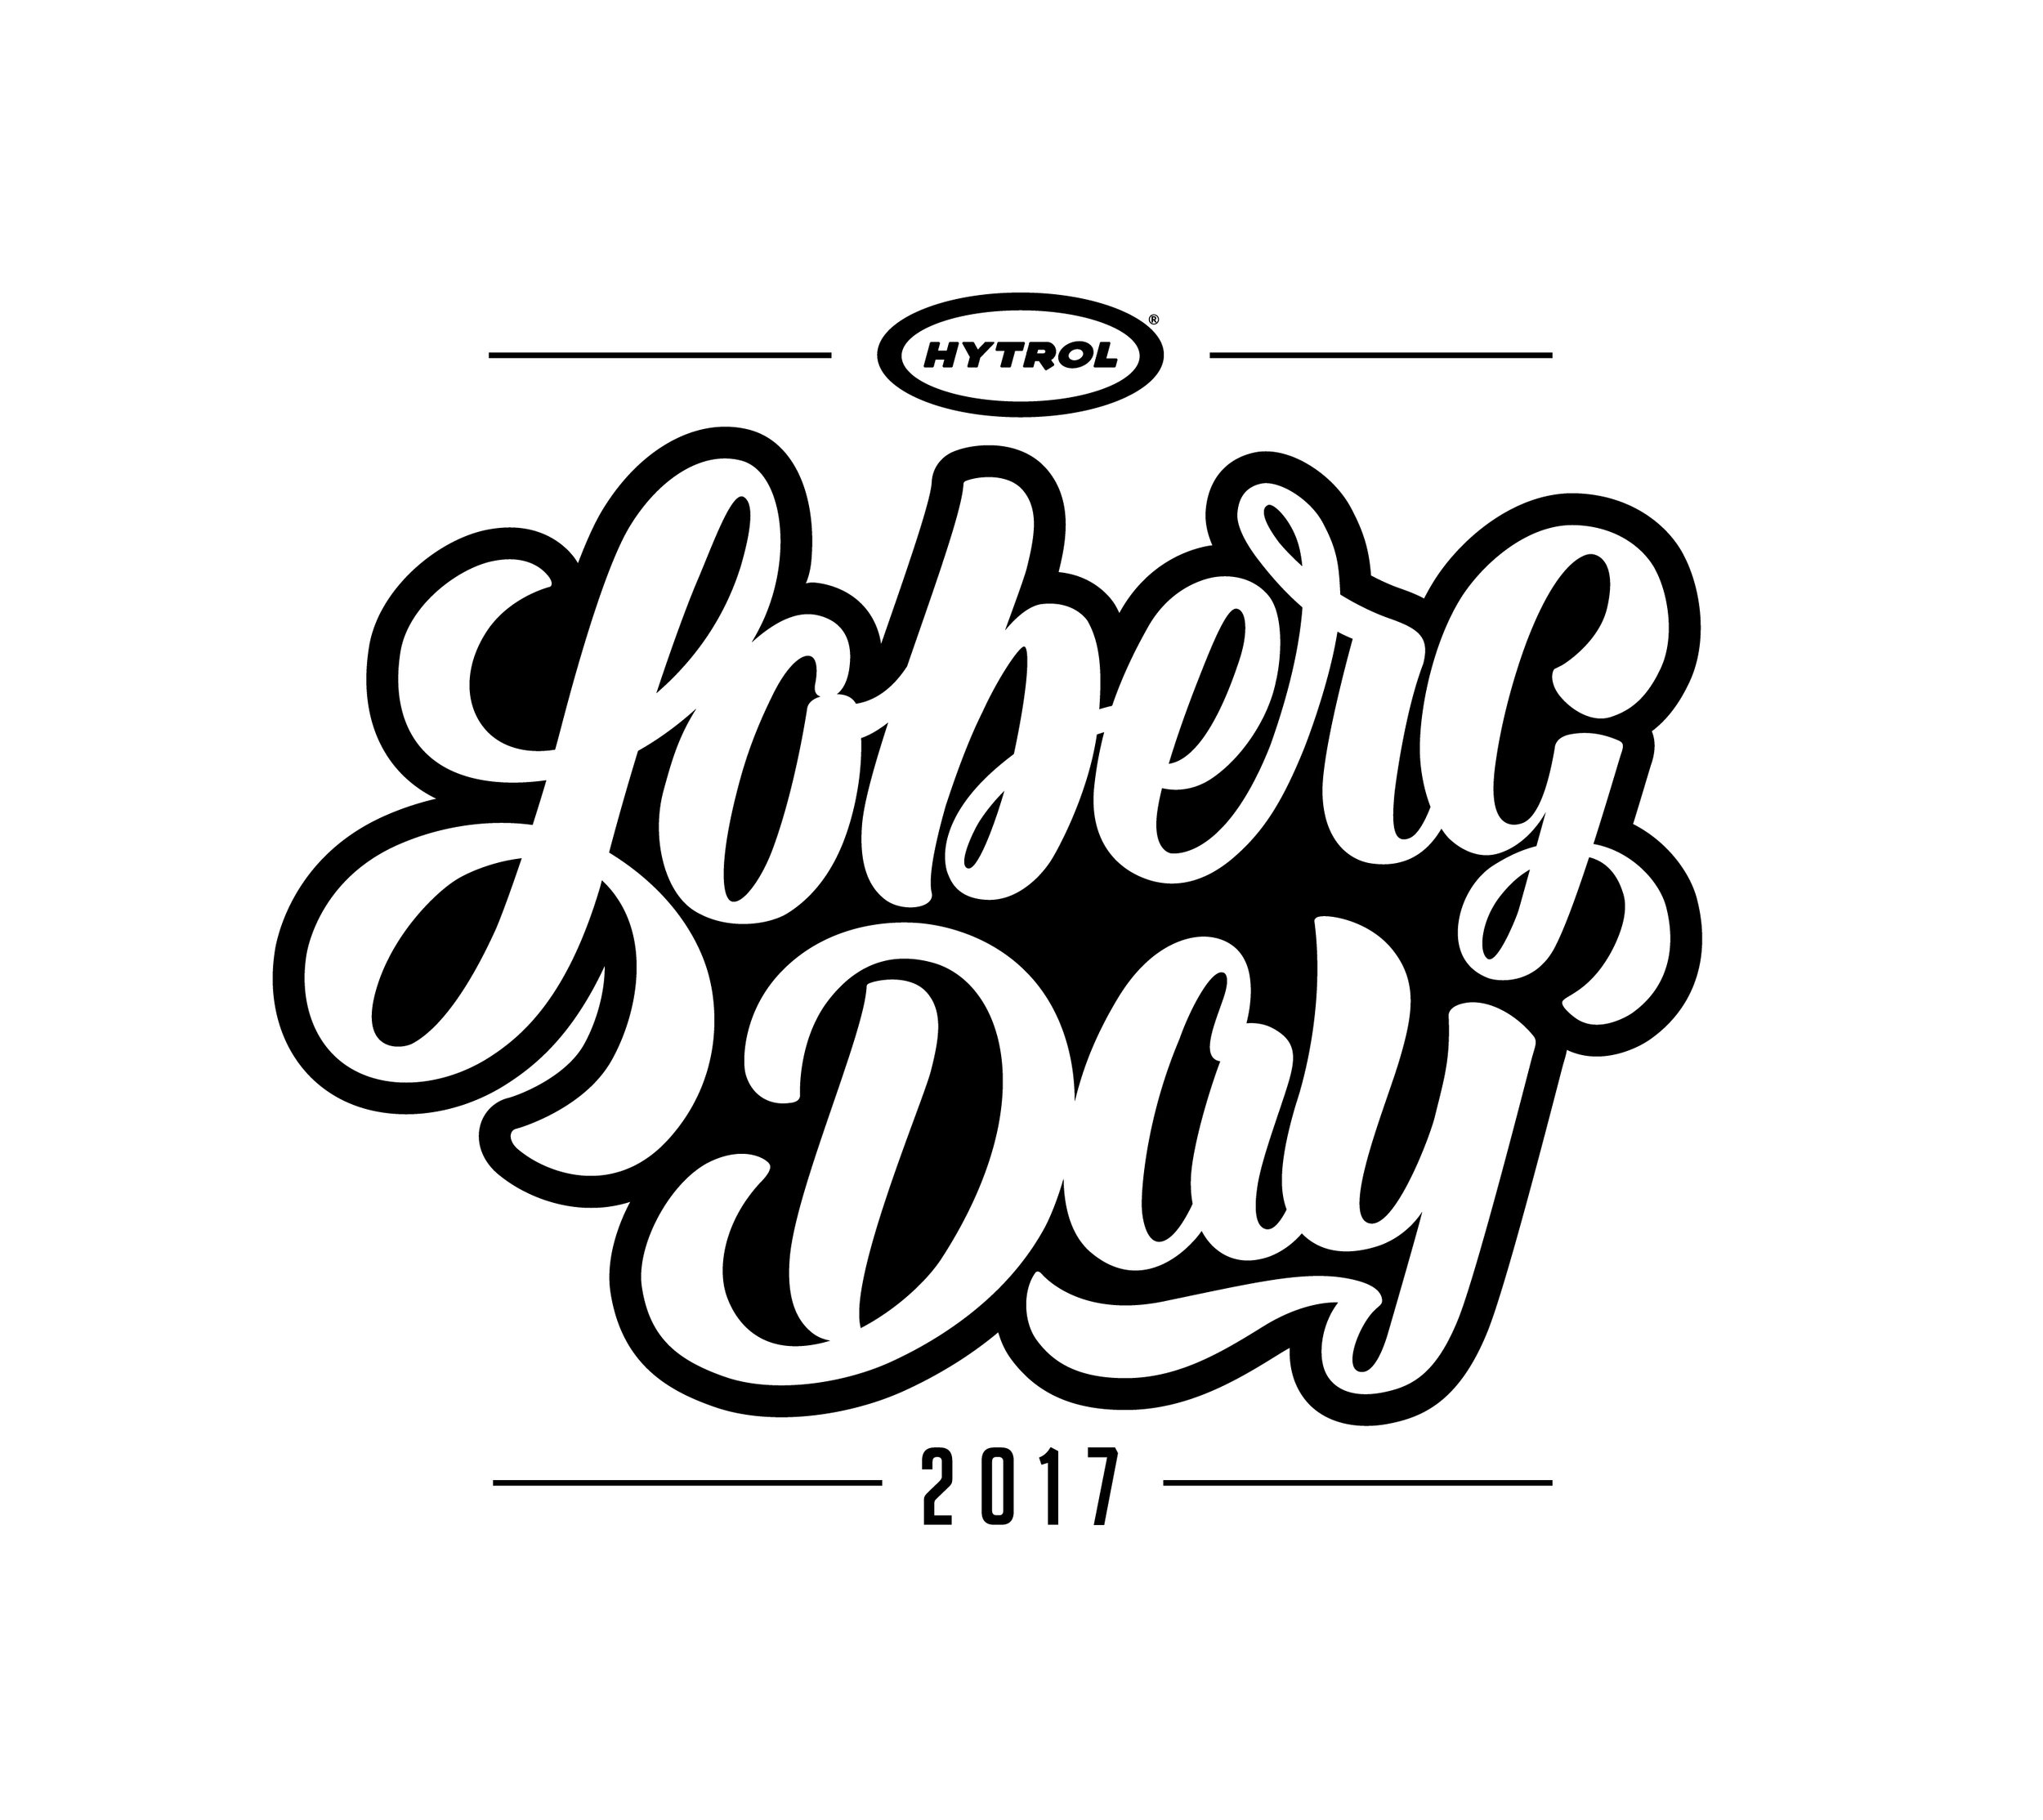 Loberg Day 2017 logo-01.jpg